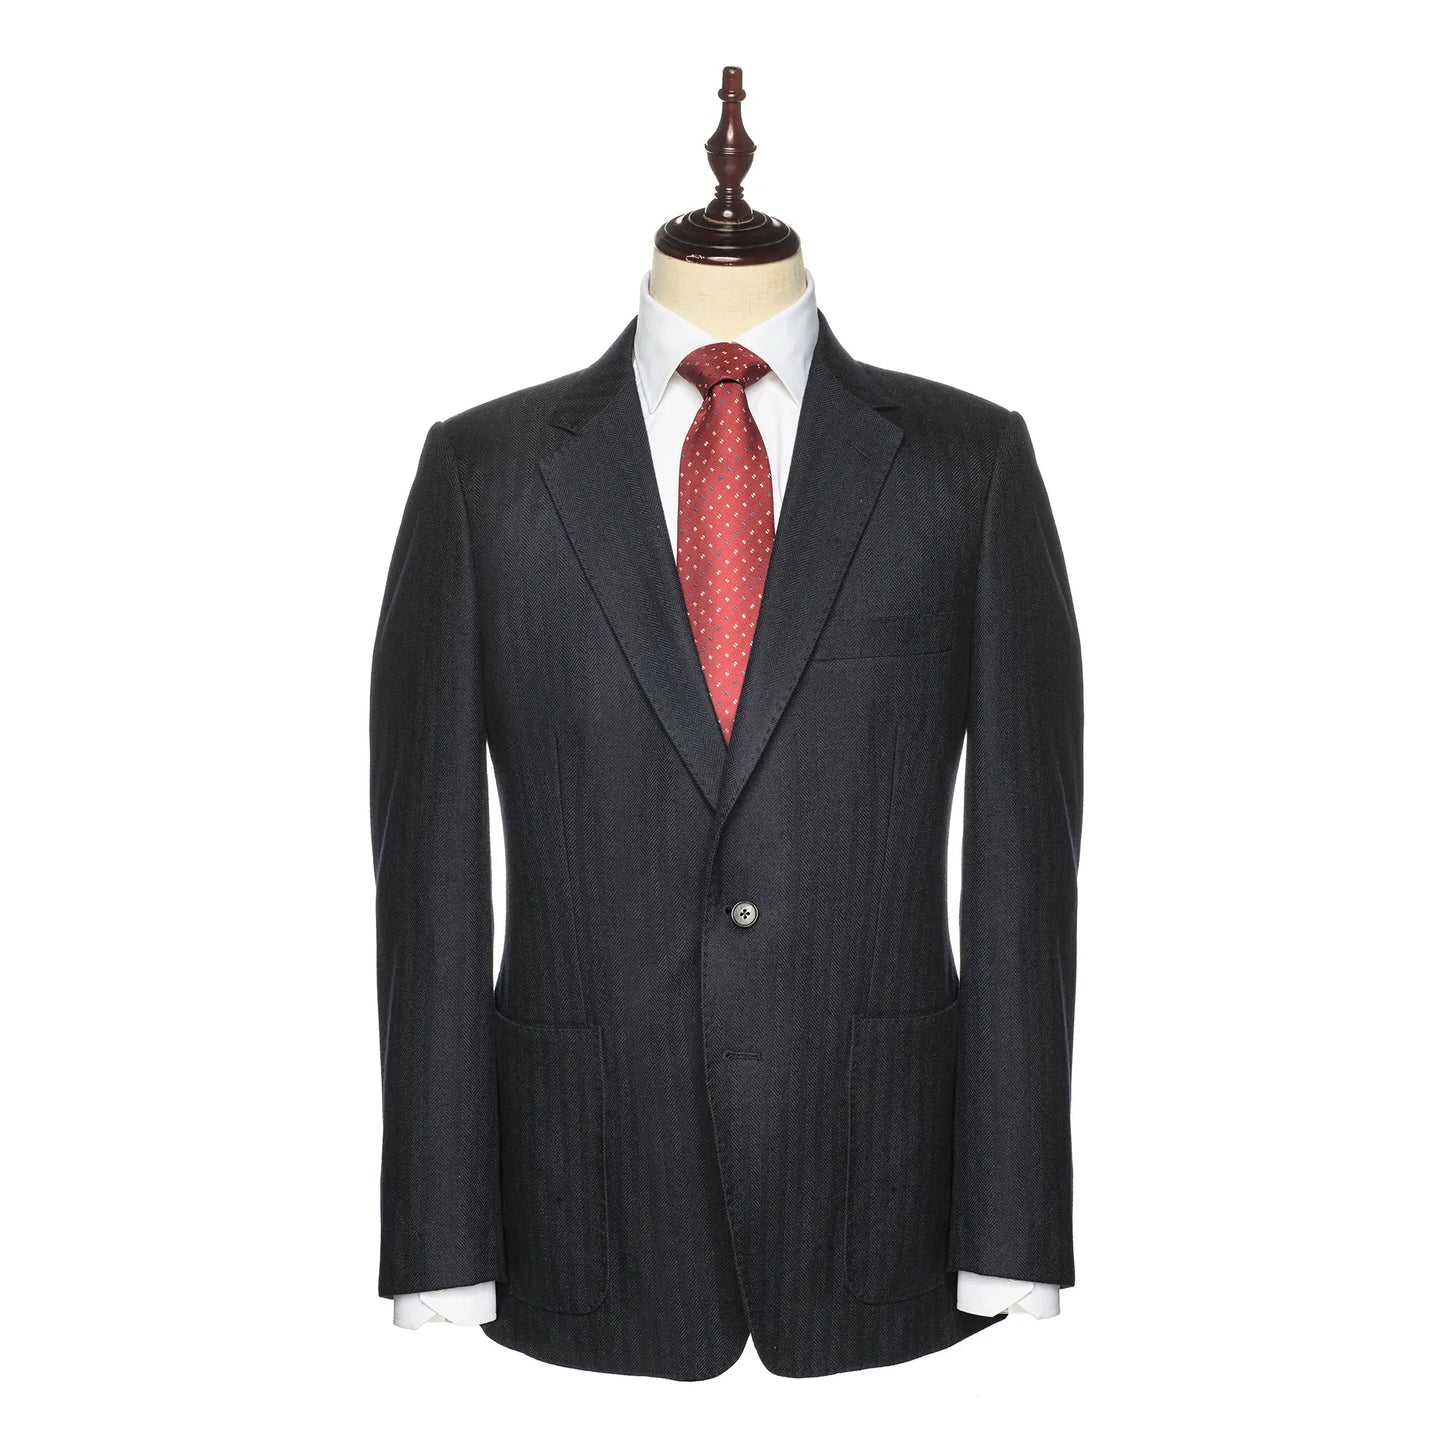 Black Herringbone Jacket - Larimars Clothing Men's Formal and casual wear shirts